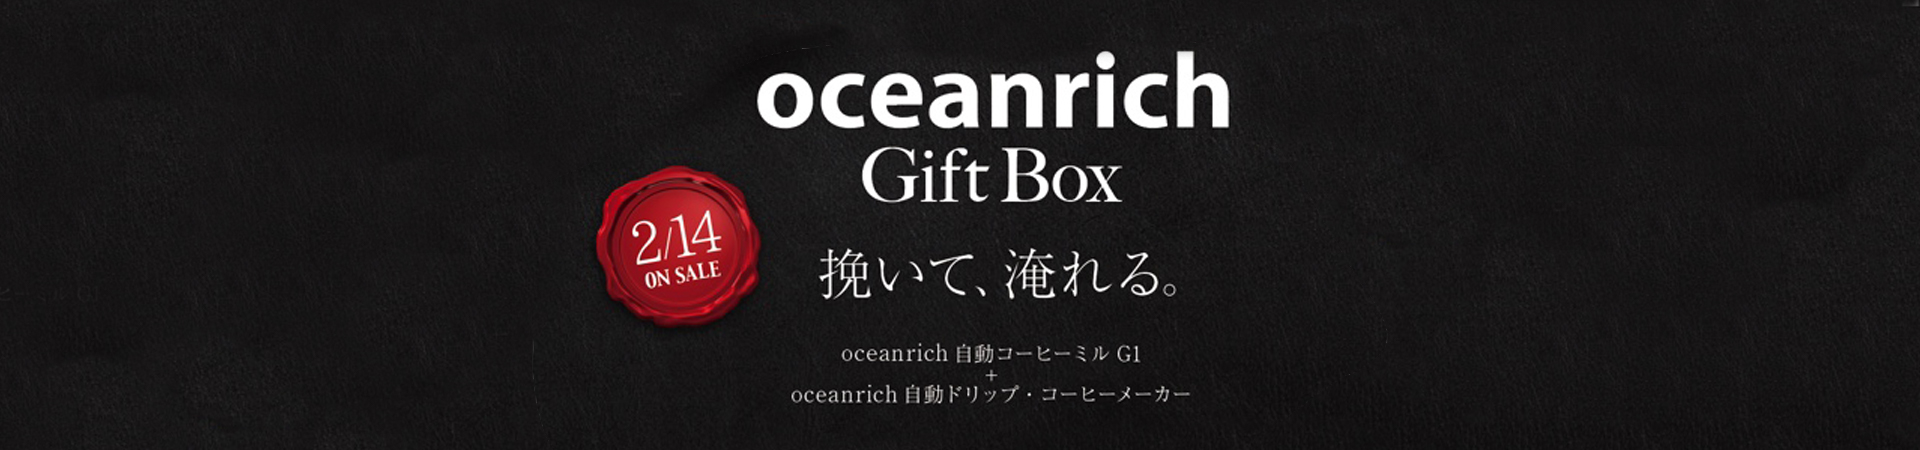 oceanrich Gift